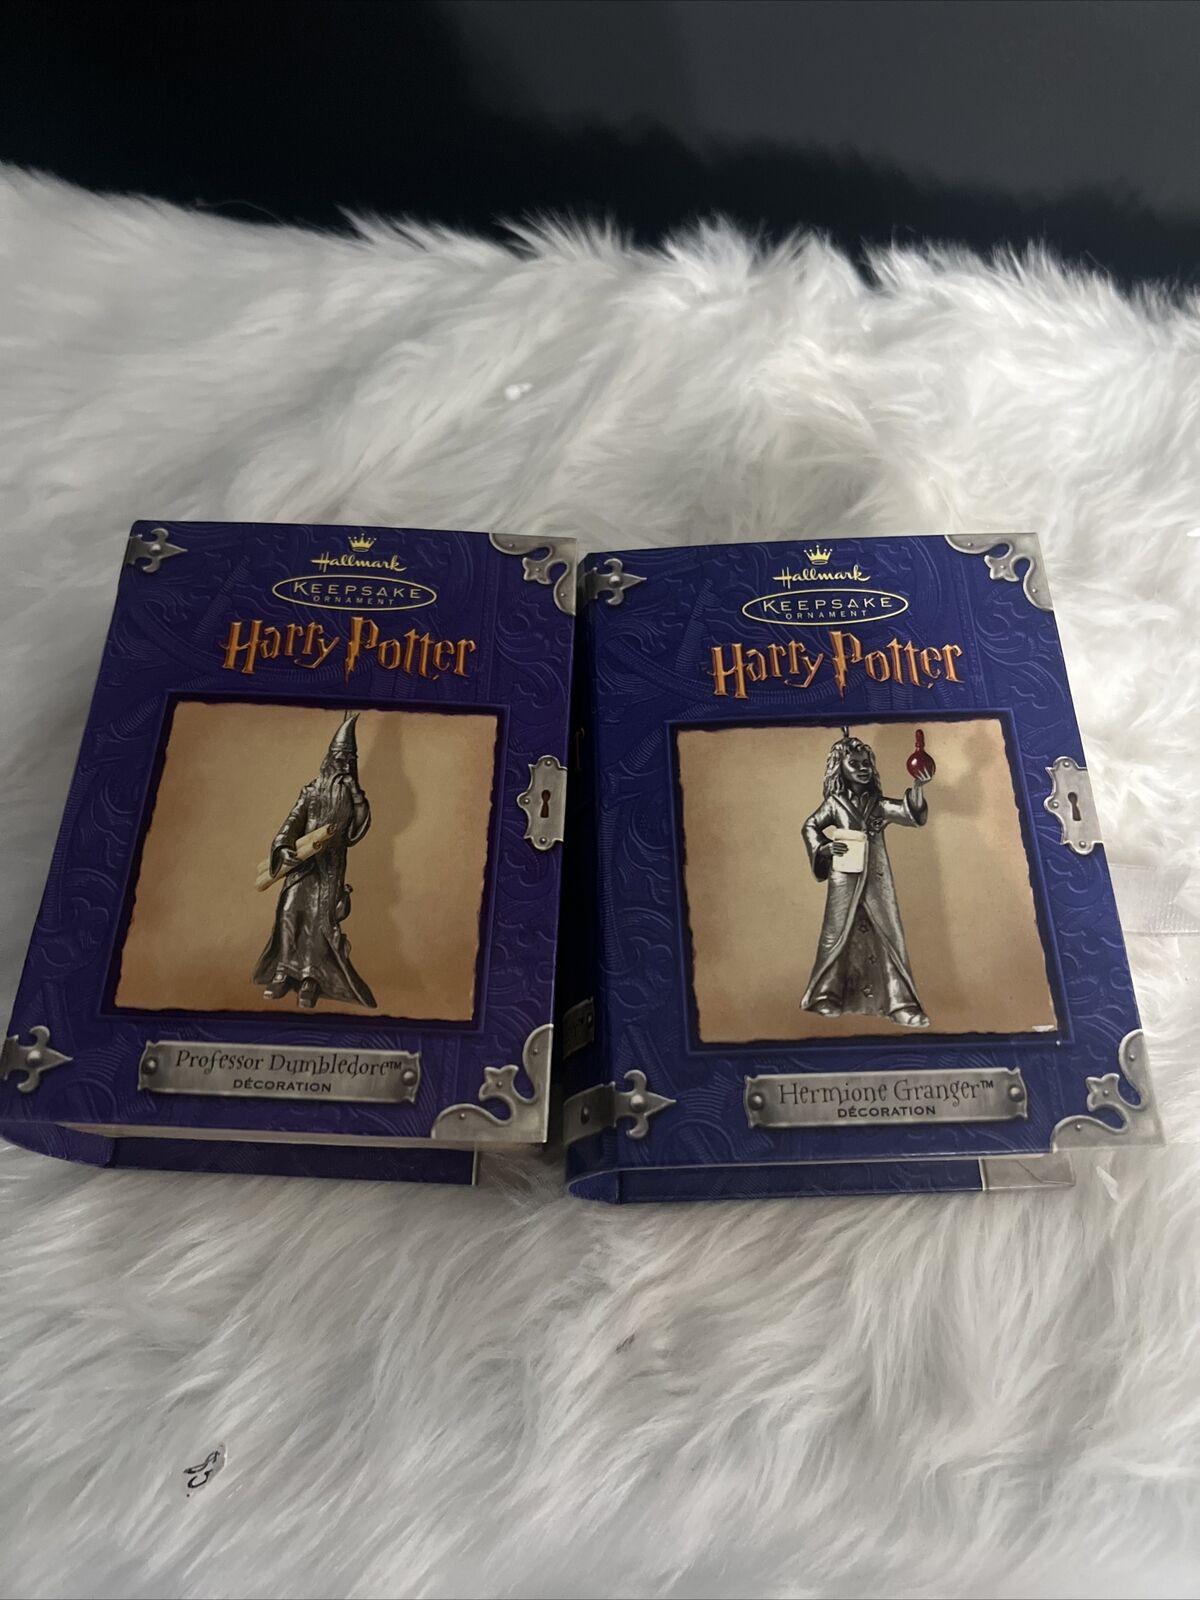 VTG Hallmark Keepsake 2 Ornament’s Harry Potter Pewter 2000